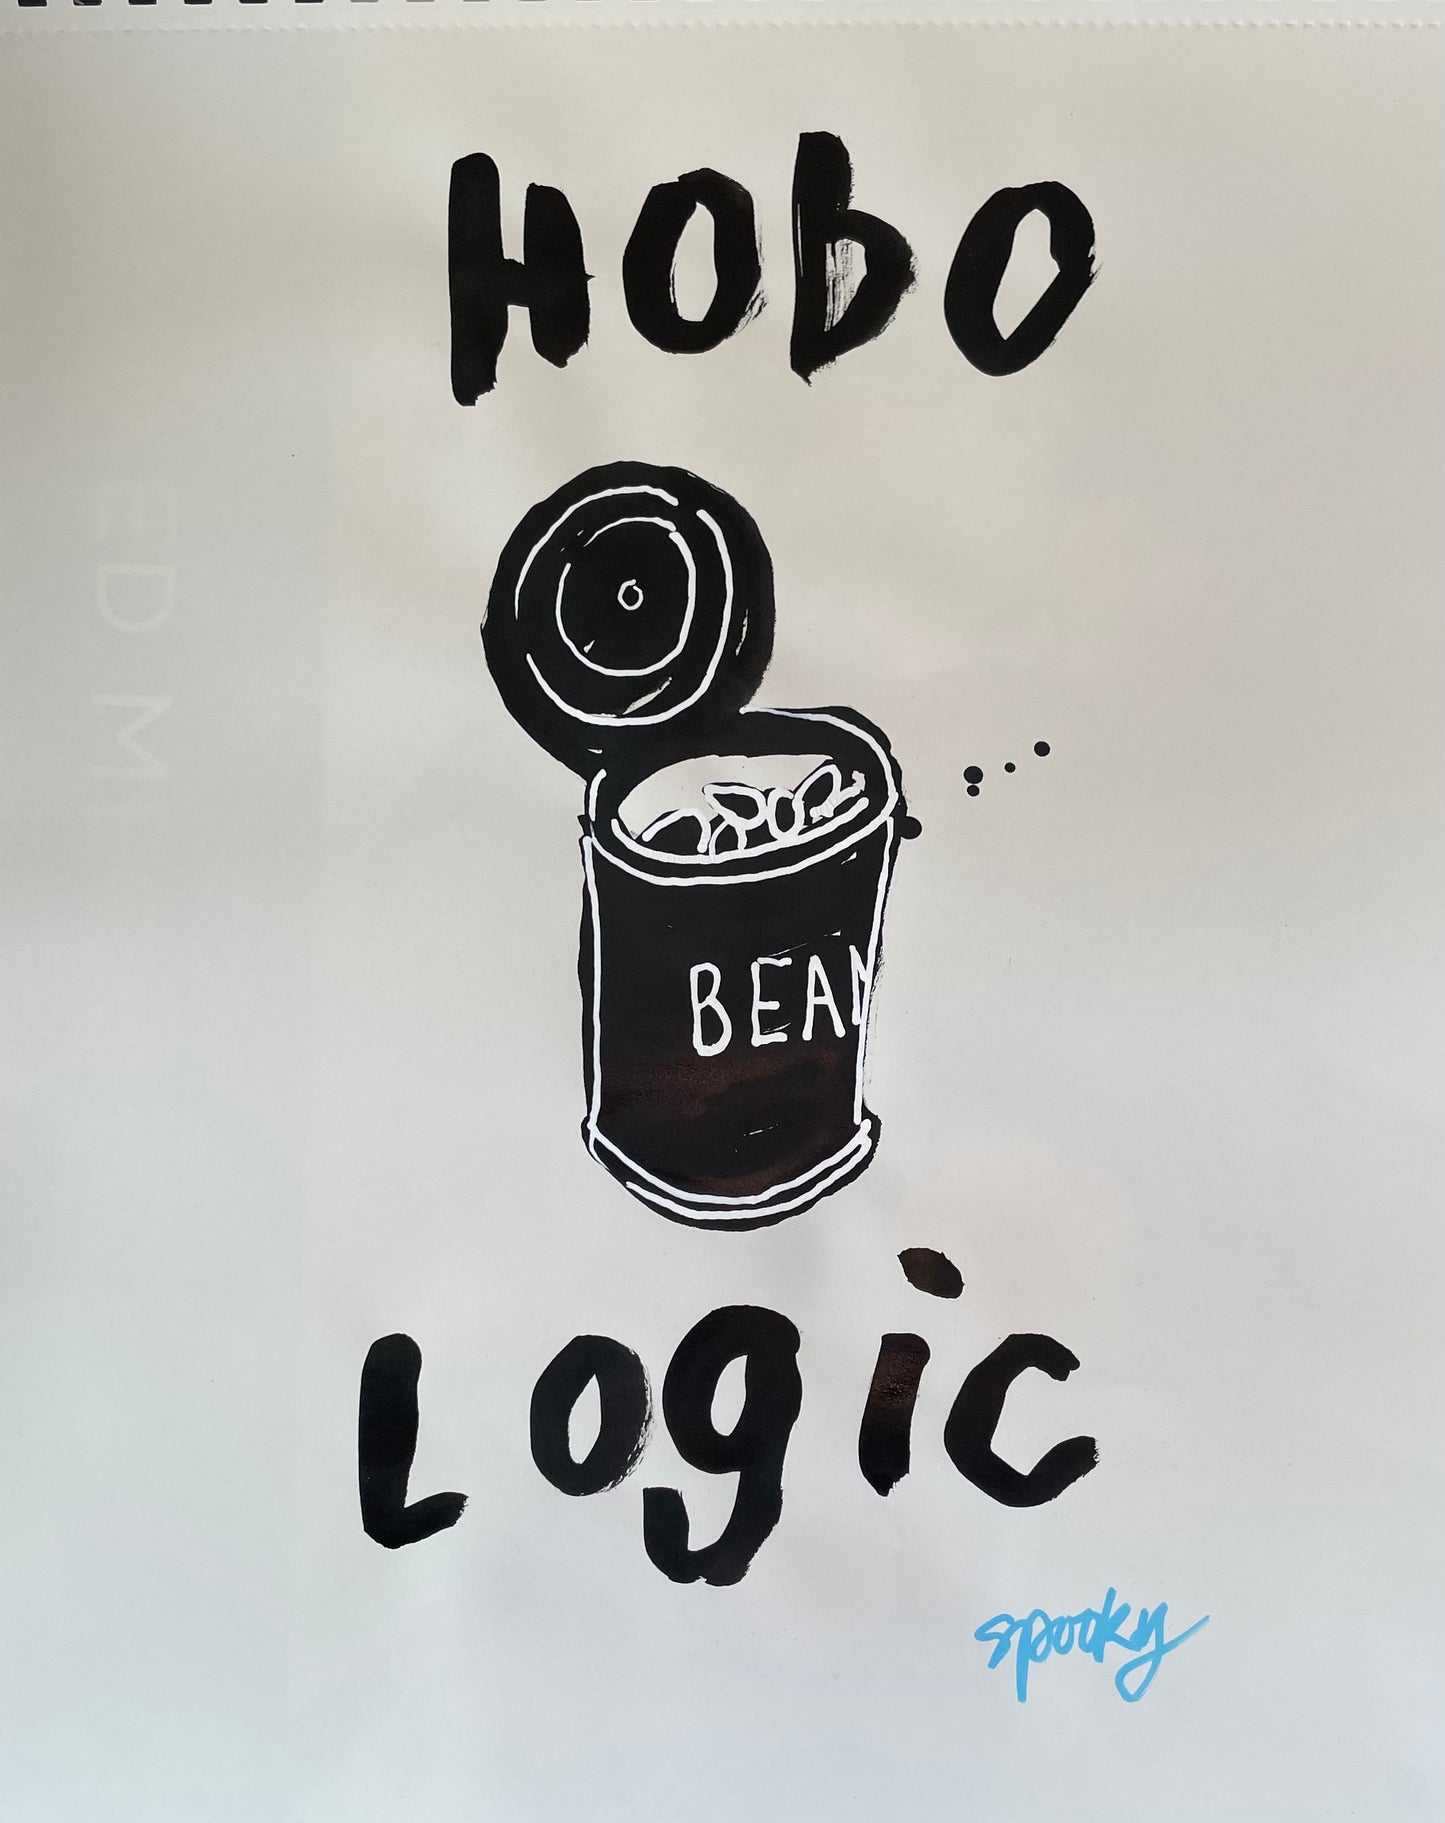 Hobo Logic